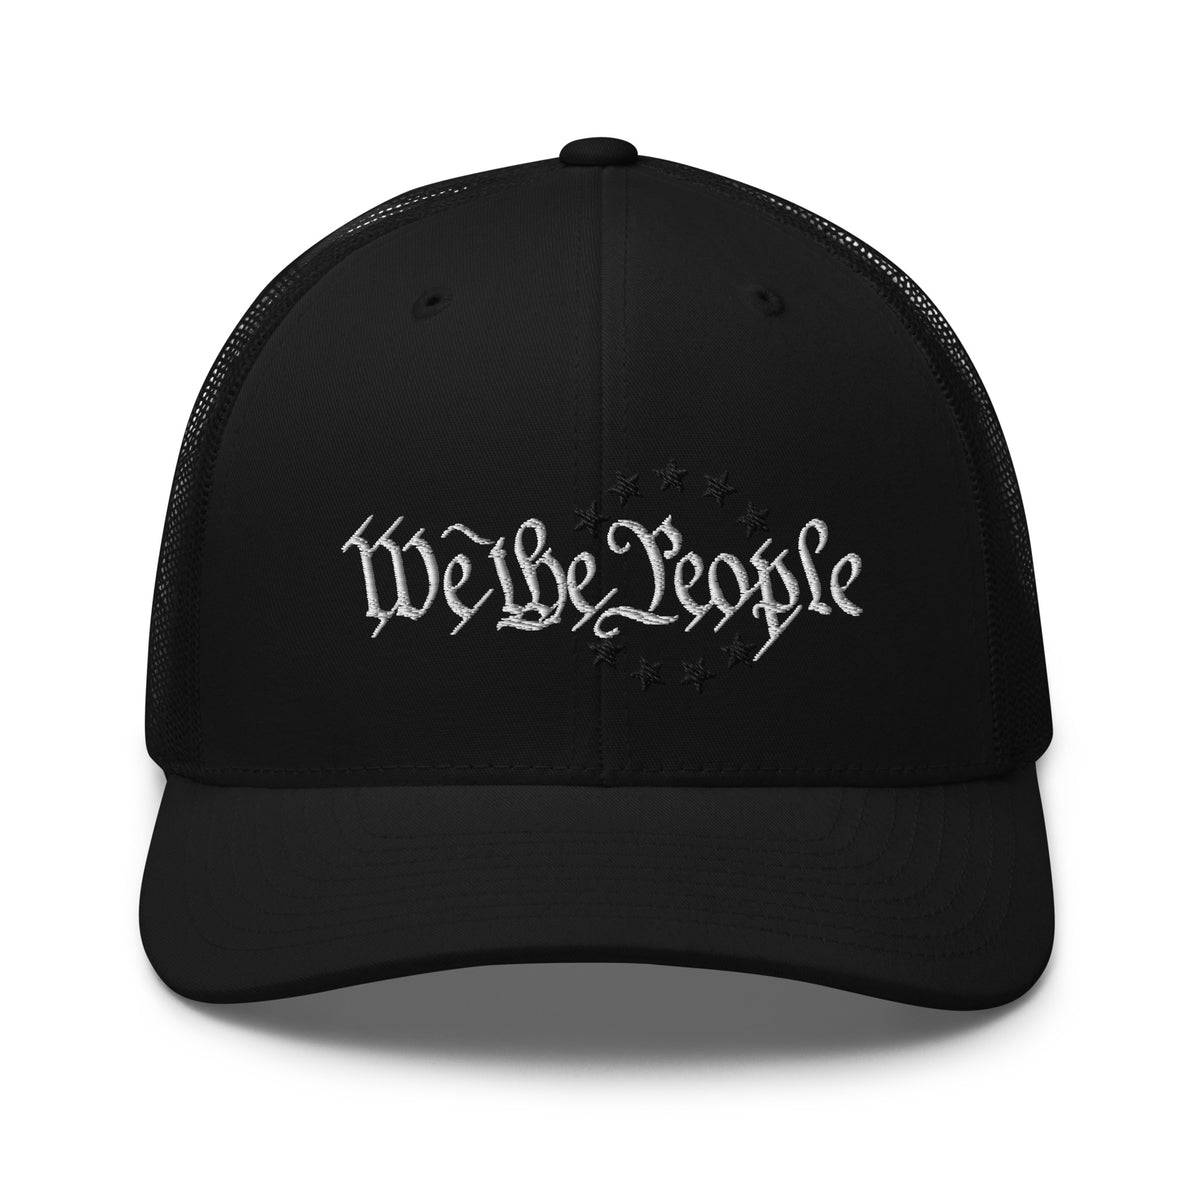 We The People Snapback Hat